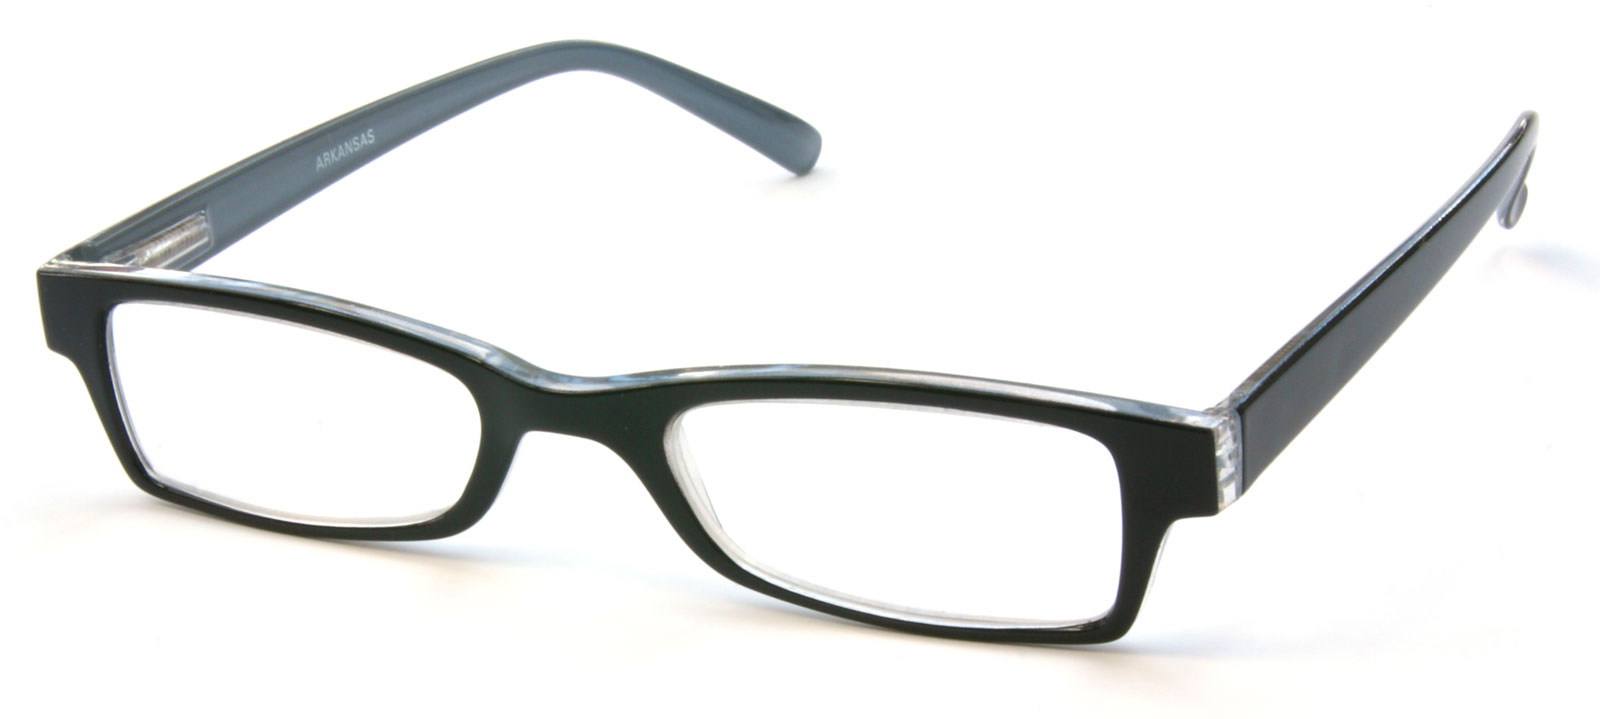 clipart reading glasses - photo #50